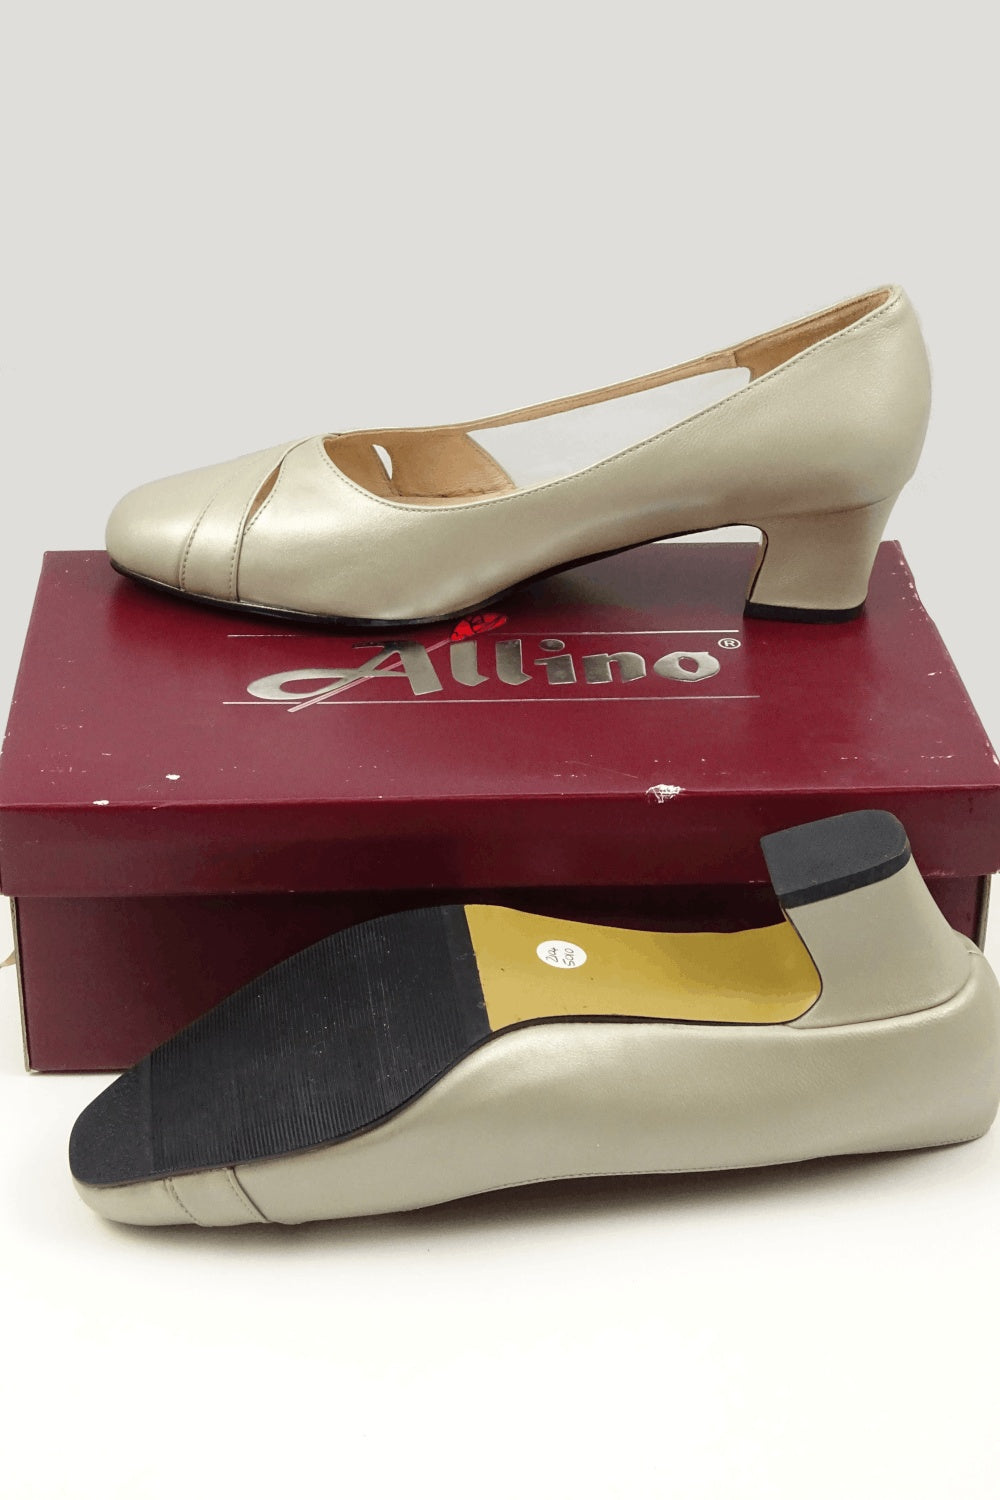 Allino Pearl Silver Heels 8C